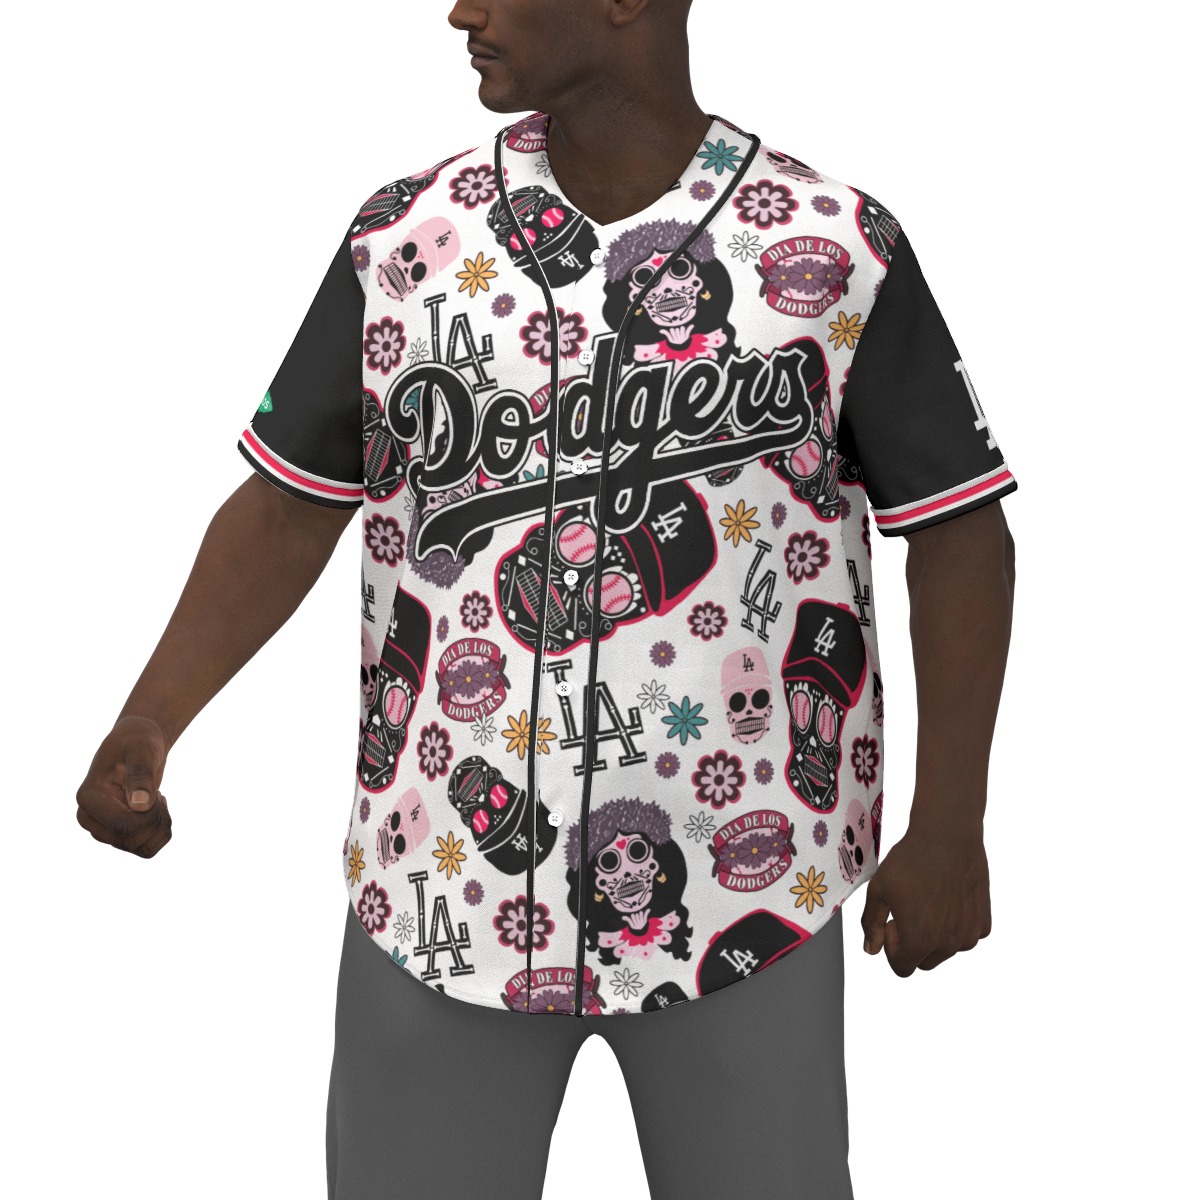 black dodgers baseball jersey